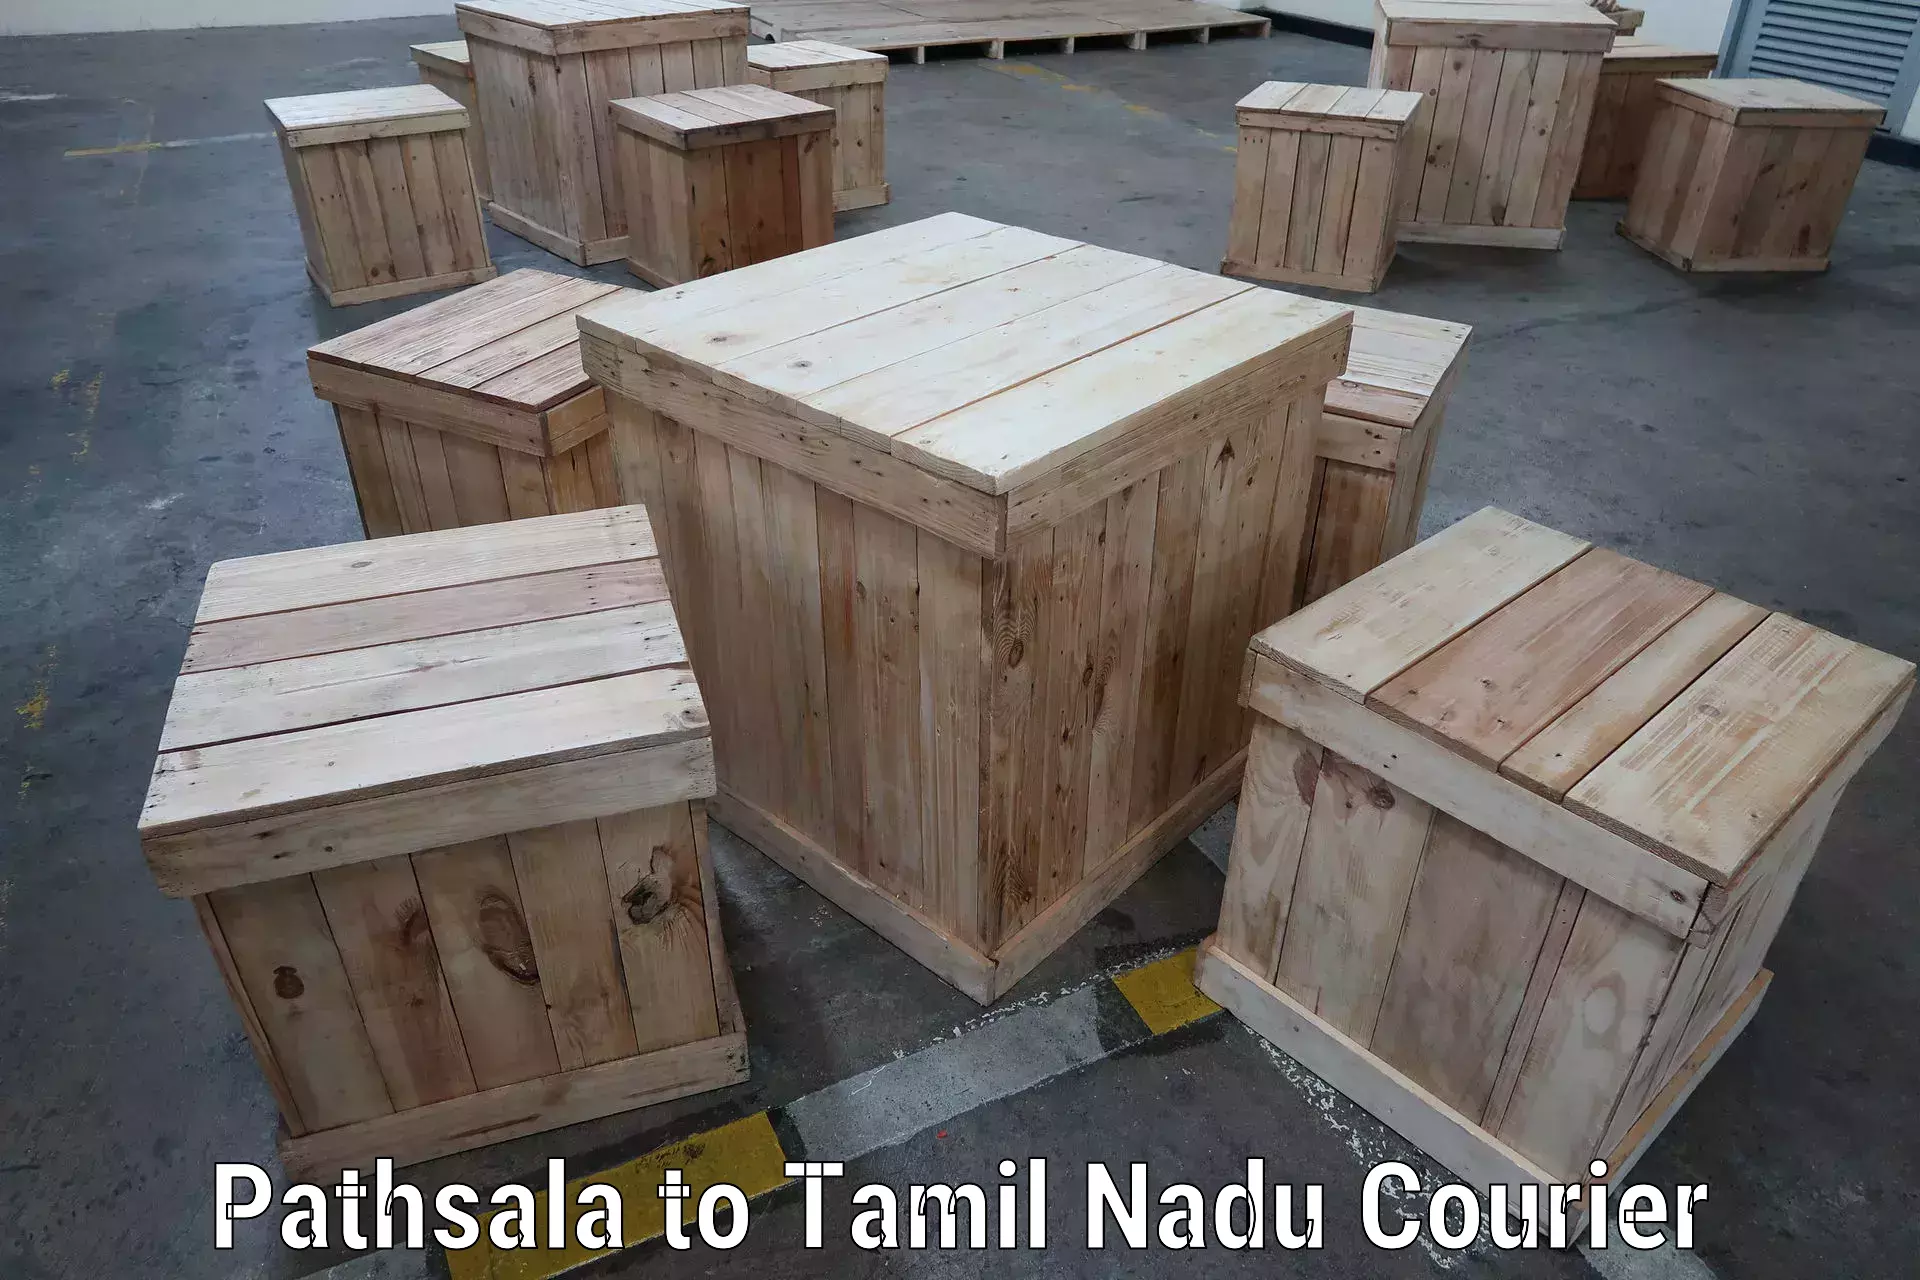 Supply chain efficiency Pathsala to Tamil Nadu